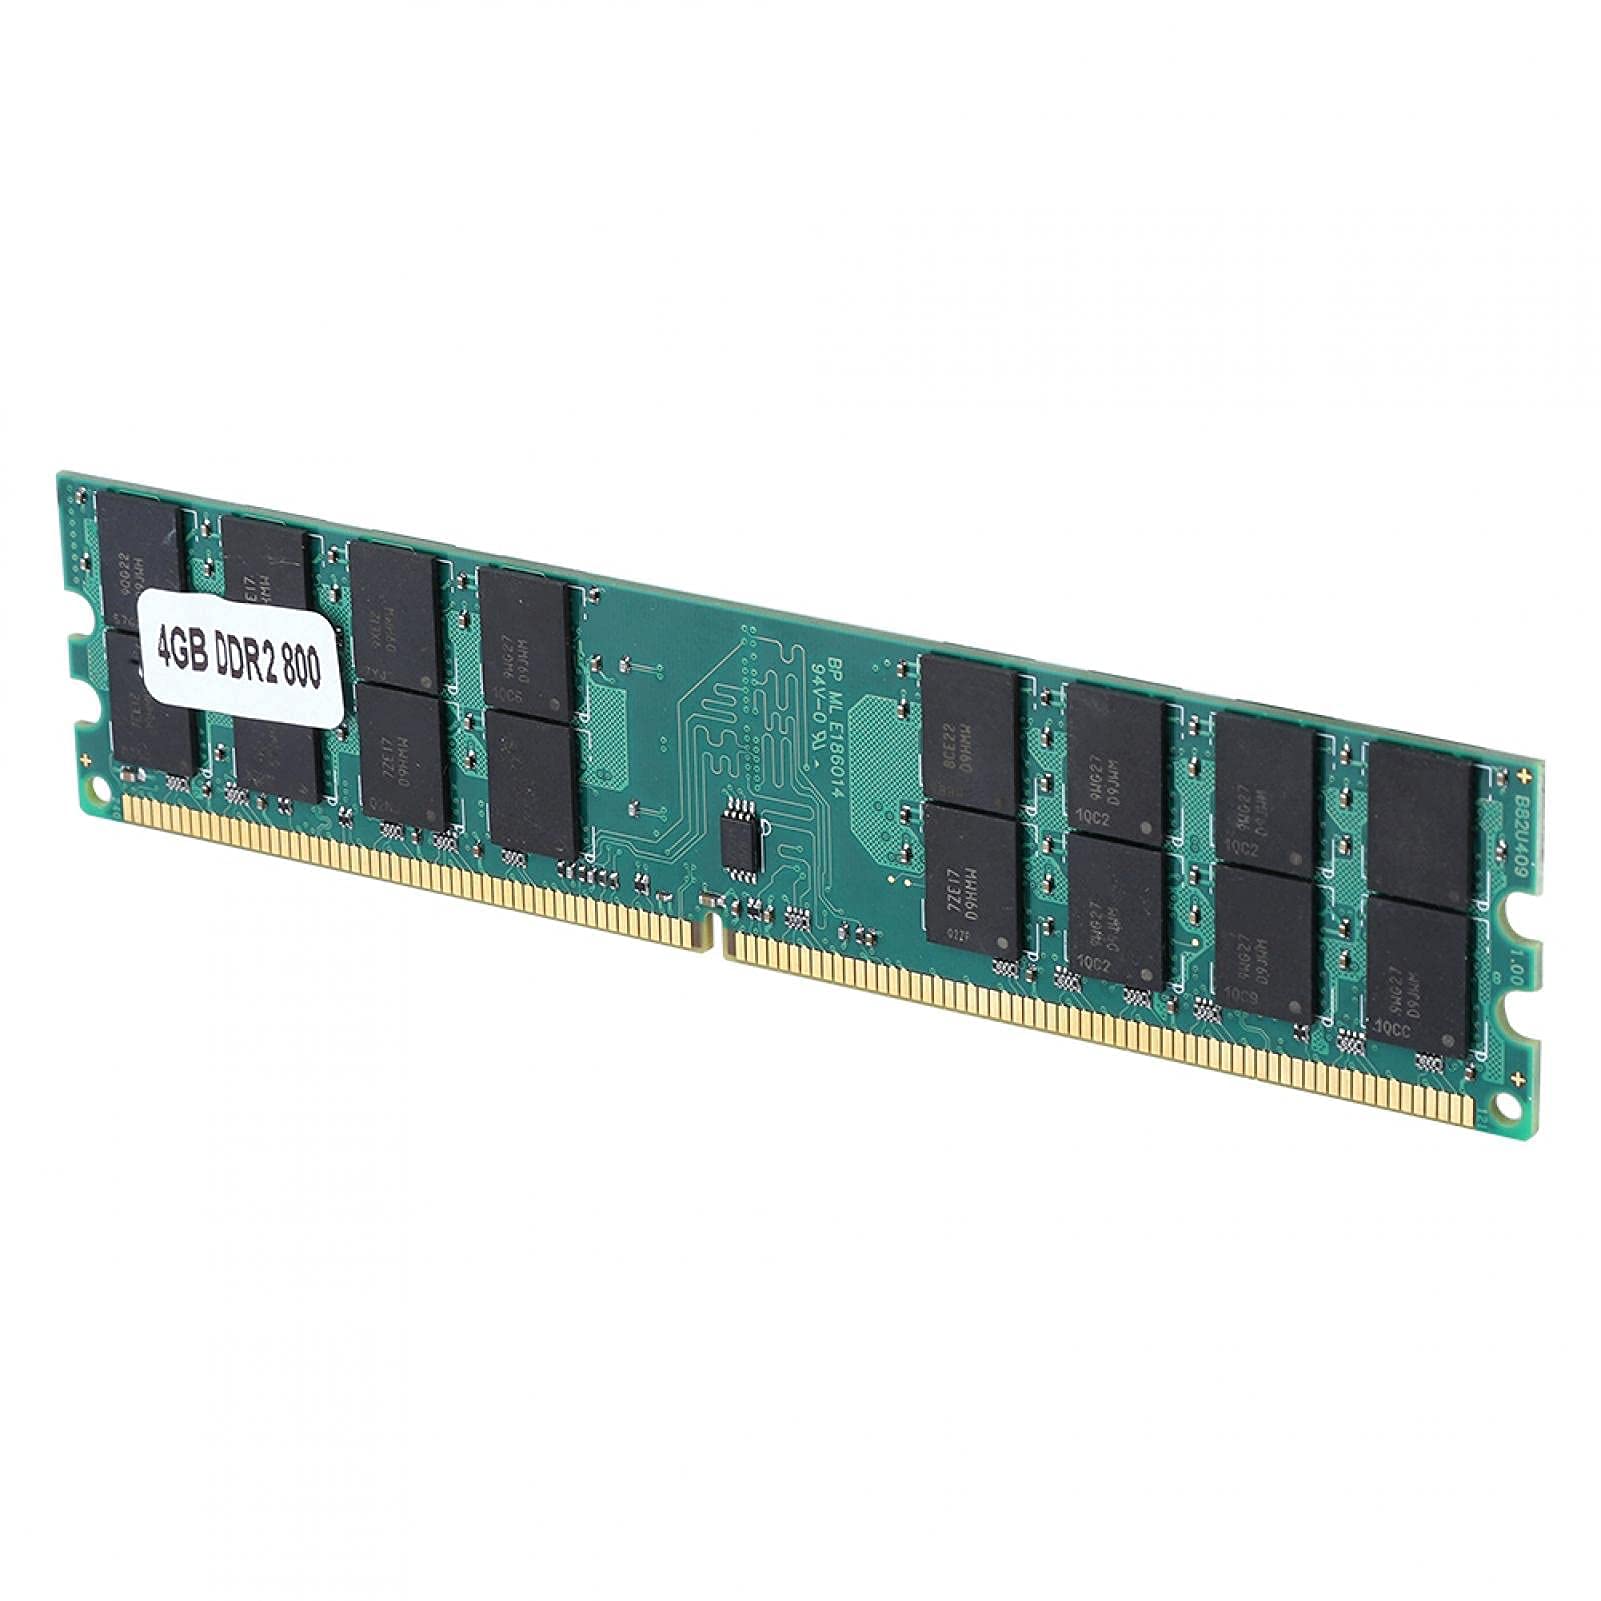 Ciglow DDR2 RAM Module, 4GB 800MHz 240 Pin DDR2 Memory Module Fast Data Transmission RAM DDR2 Module Desktop Memory RAM Module for AMD System.